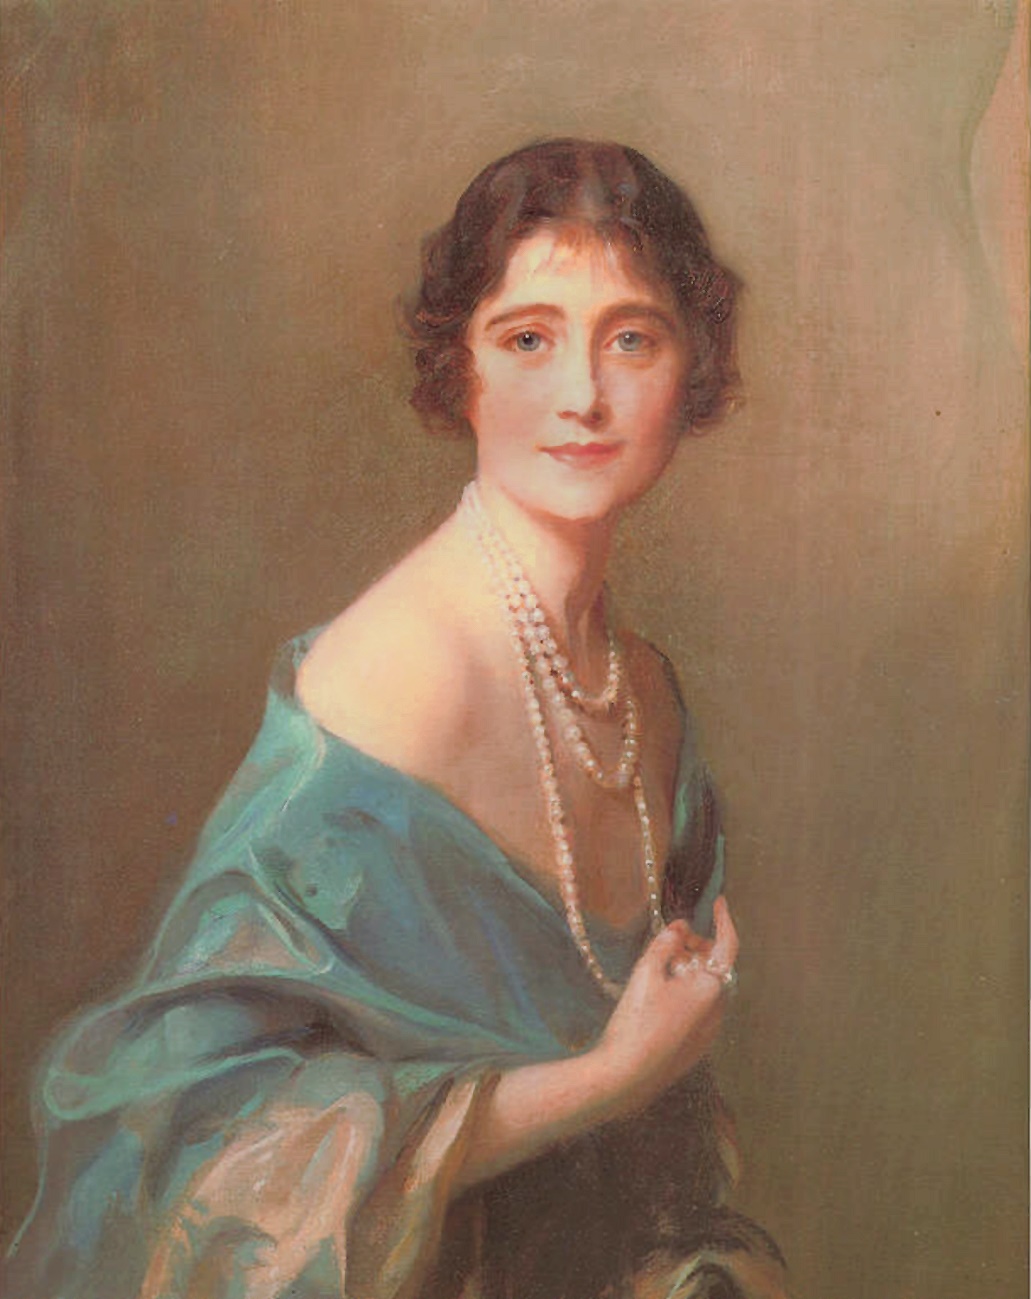 FilePhilip Alexius de Laszlo Duchess of York nee Elizabeth BowesLyon